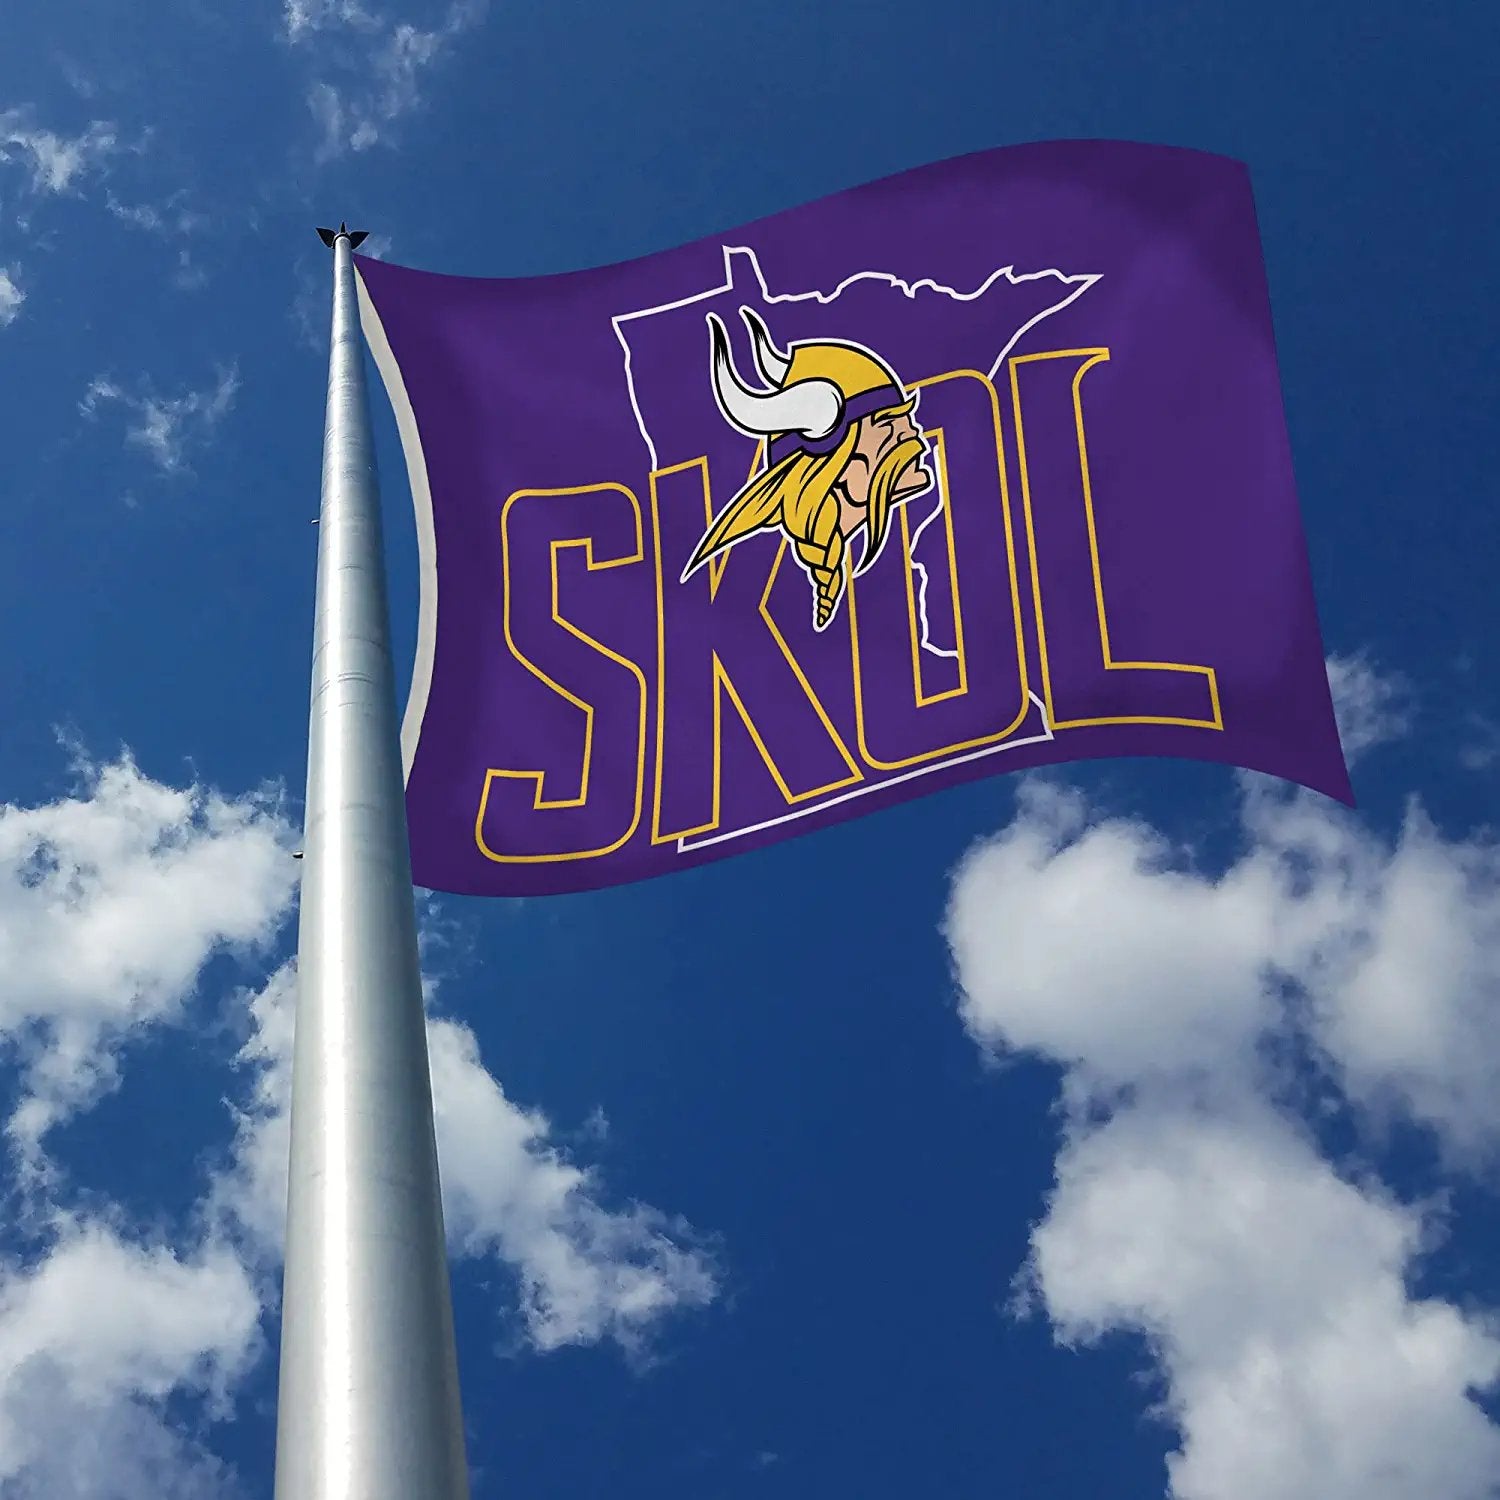 Minnesota Vikings Home State SKOL Design 3x5 Feet Premium Flag Banner with Metal Grommets Outdoor